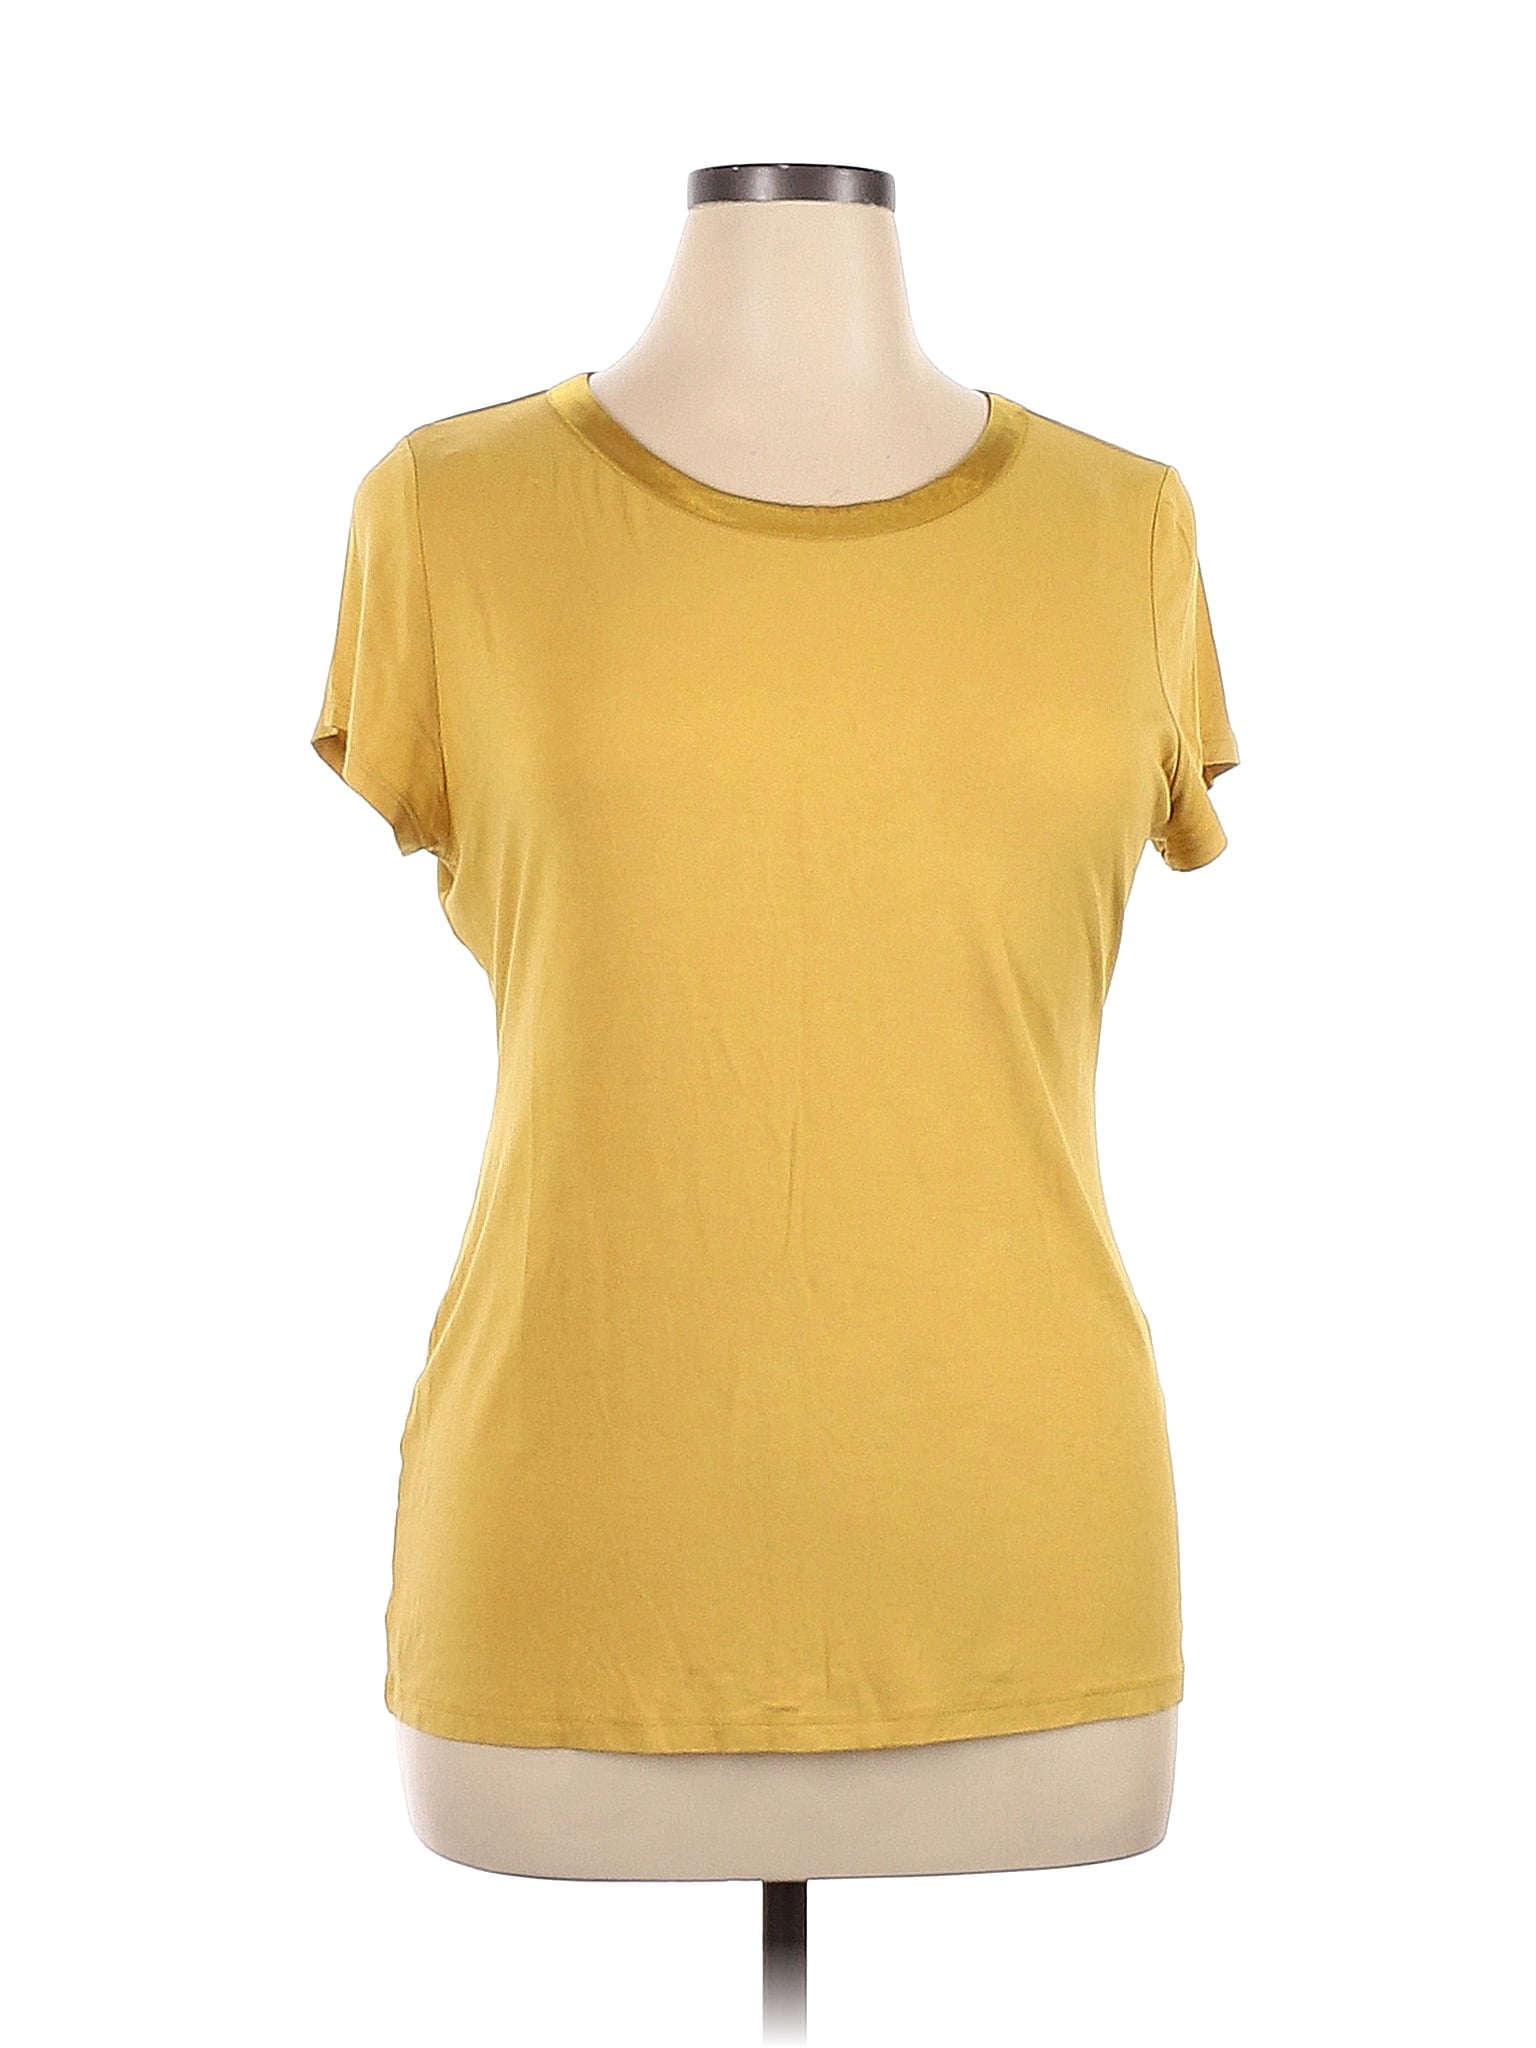 Alfani Yellow Sleeveless Top Size XL - 68% off | thredUP